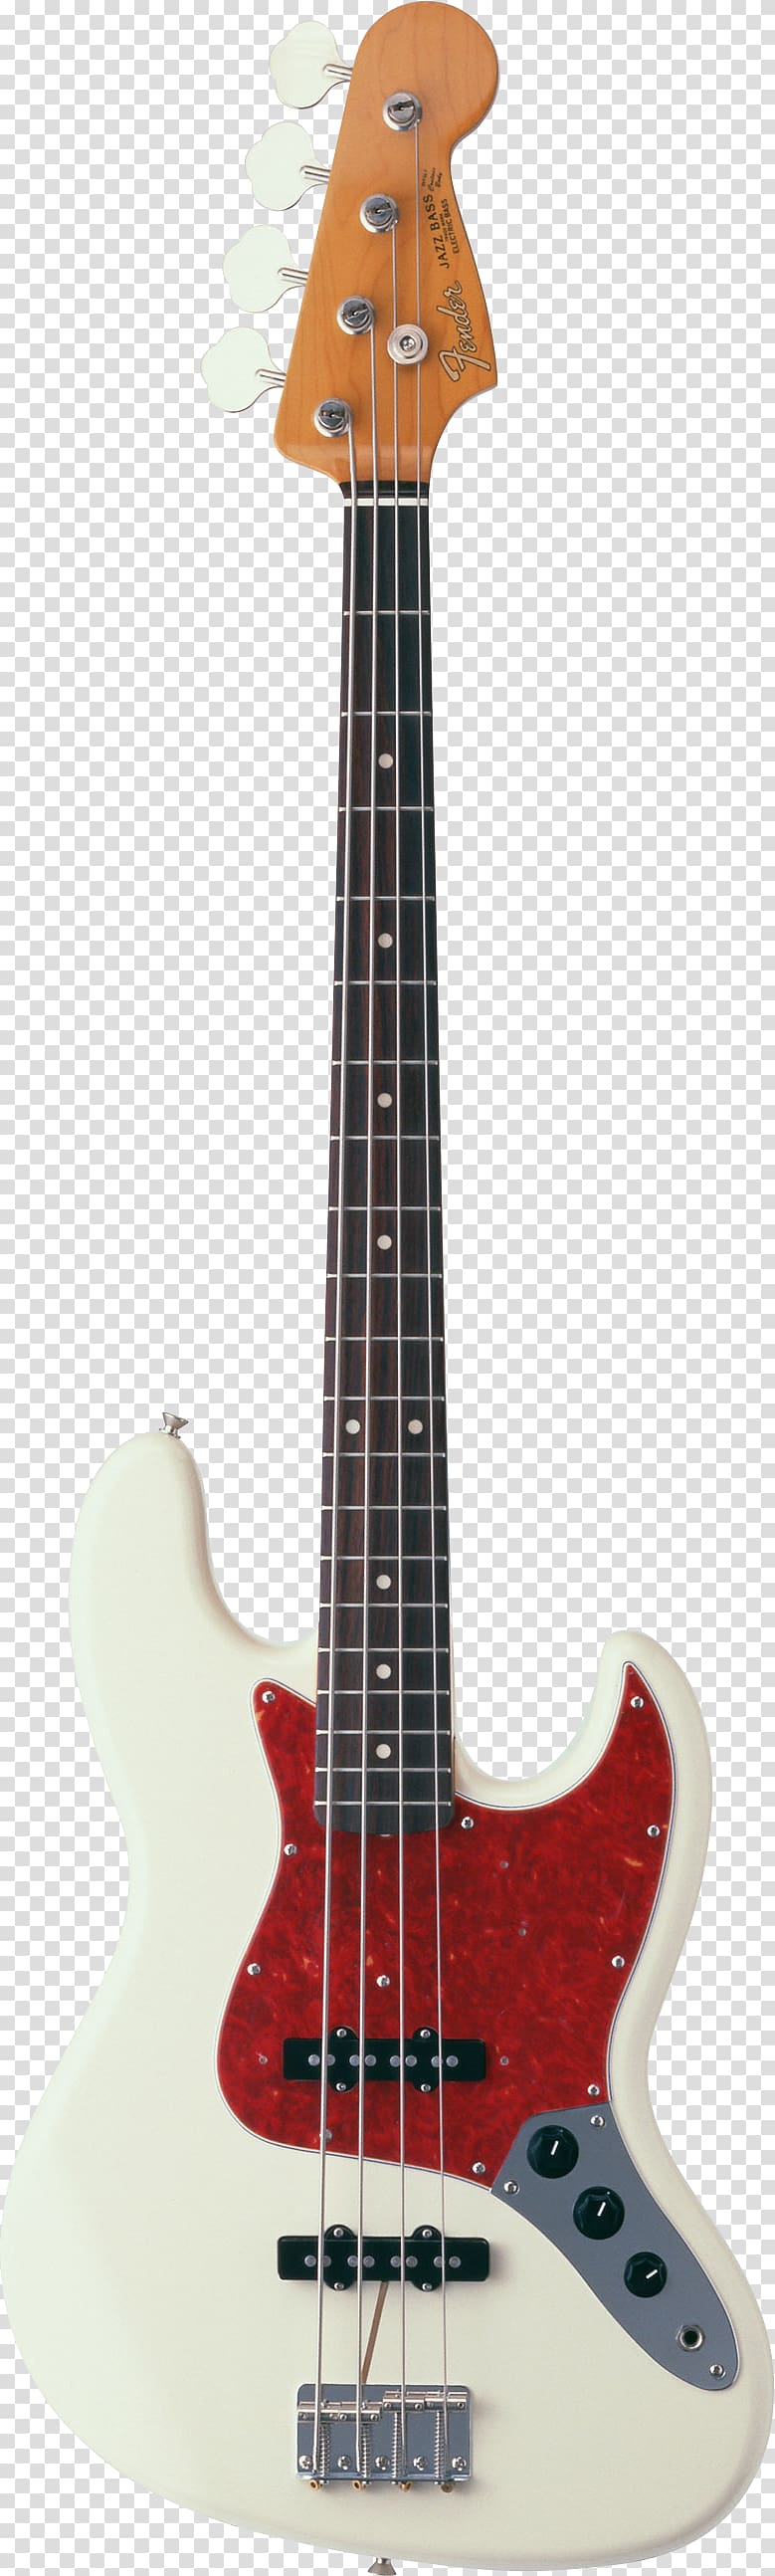 Fender Precision Bass Fender Jaguar Bass guitar Fender Jazz Bass Fender Musical Instruments Corporation, Electric guitar transparent background PNG clipart